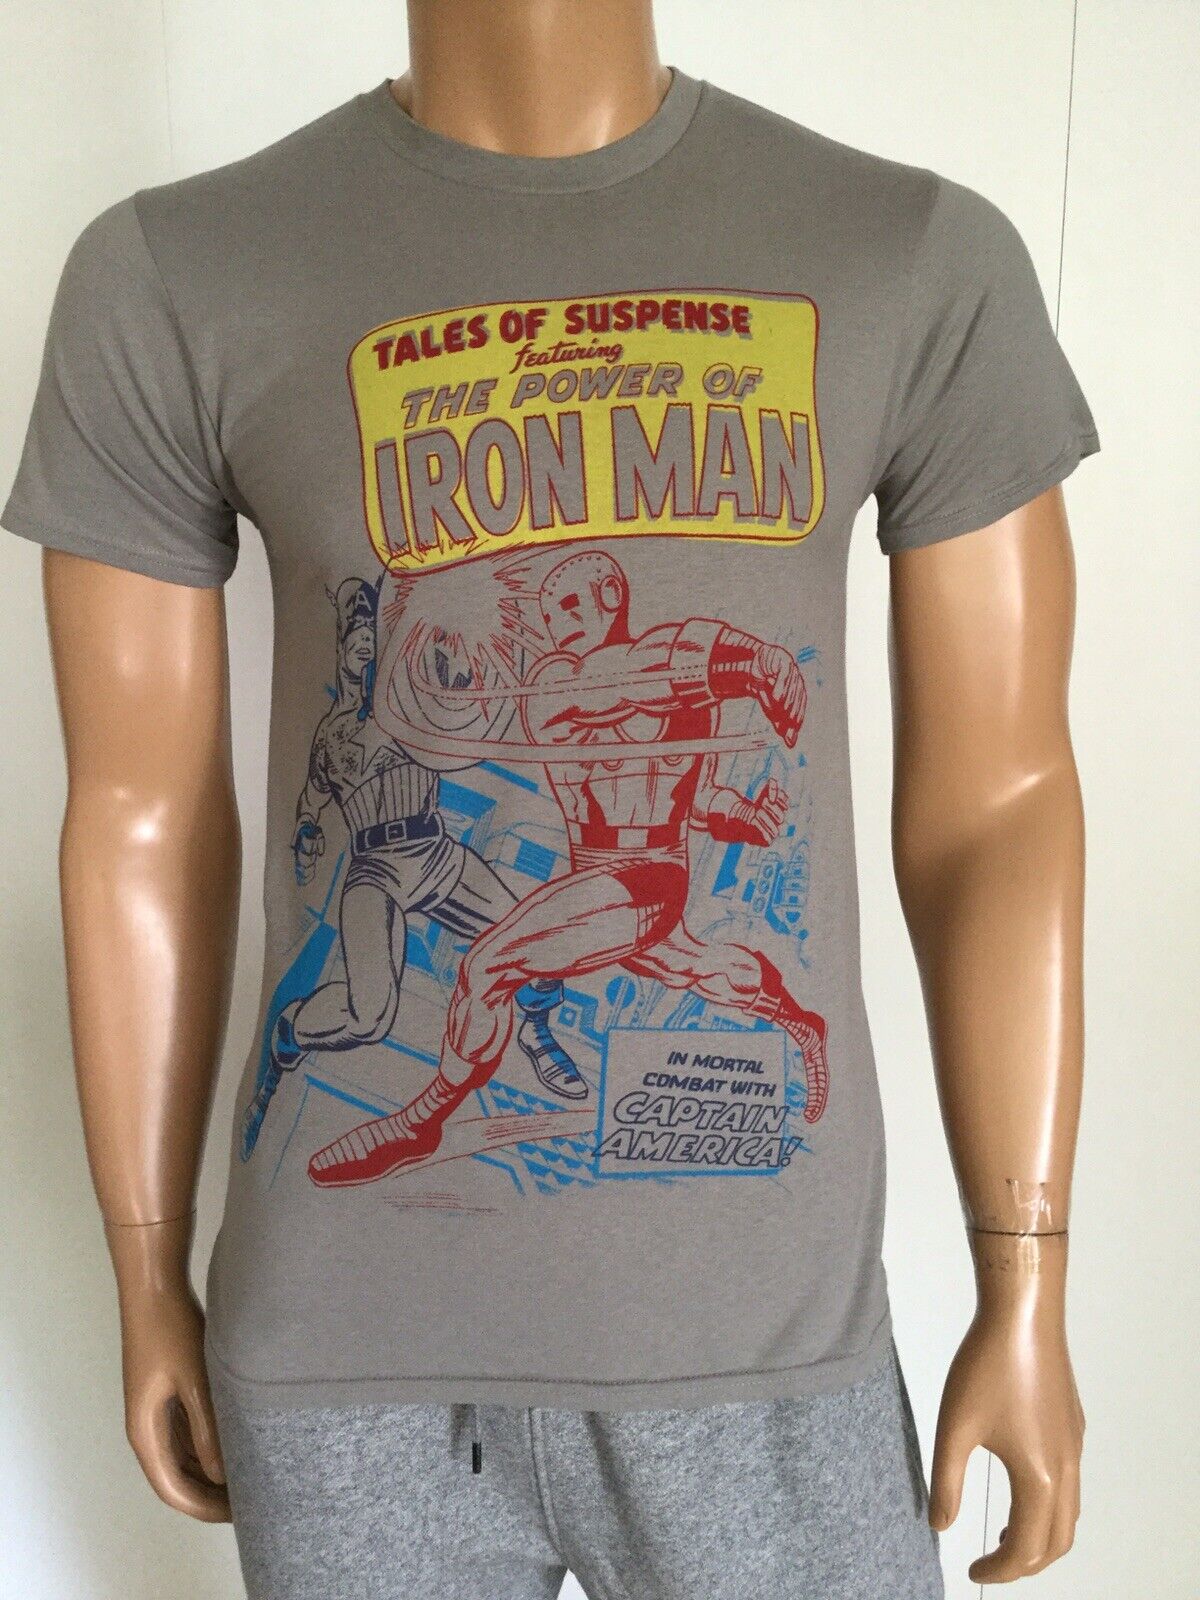 Disneyland Walt Disney World by Hanes Iron Man  T-Shirt Size S